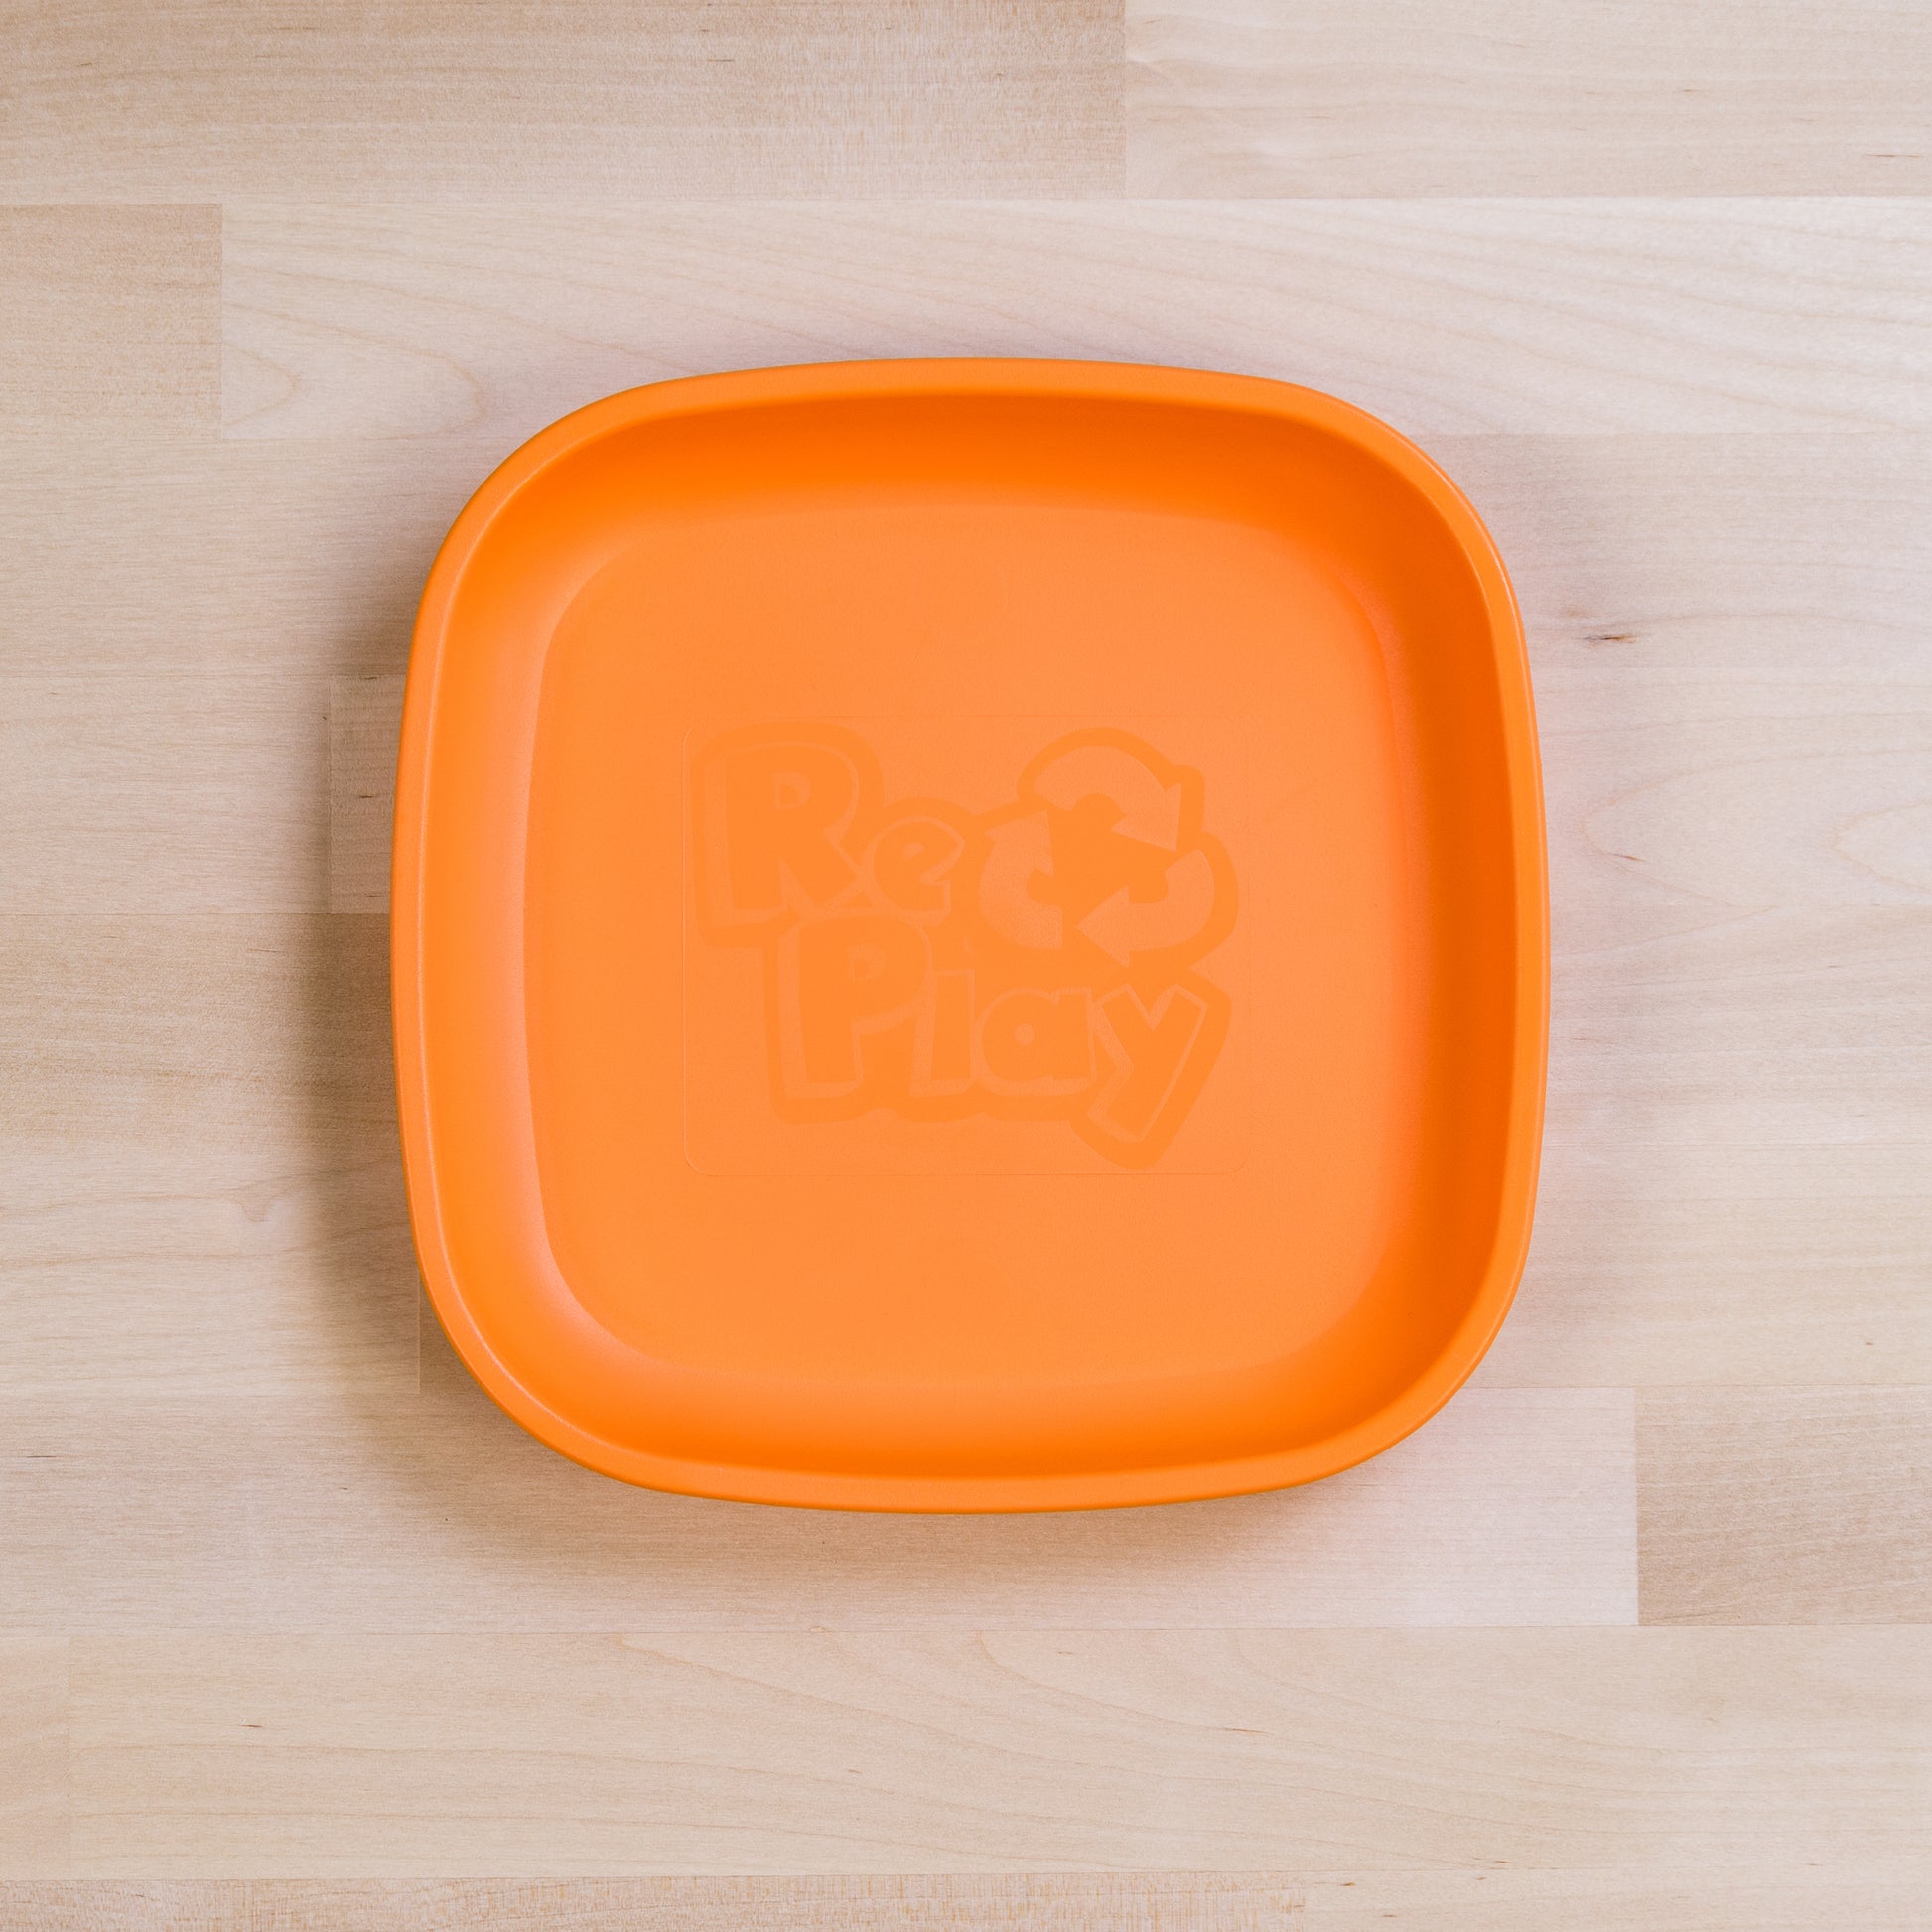 Re-Play Flat Plate Standard Size in Orange from Bear & Moo